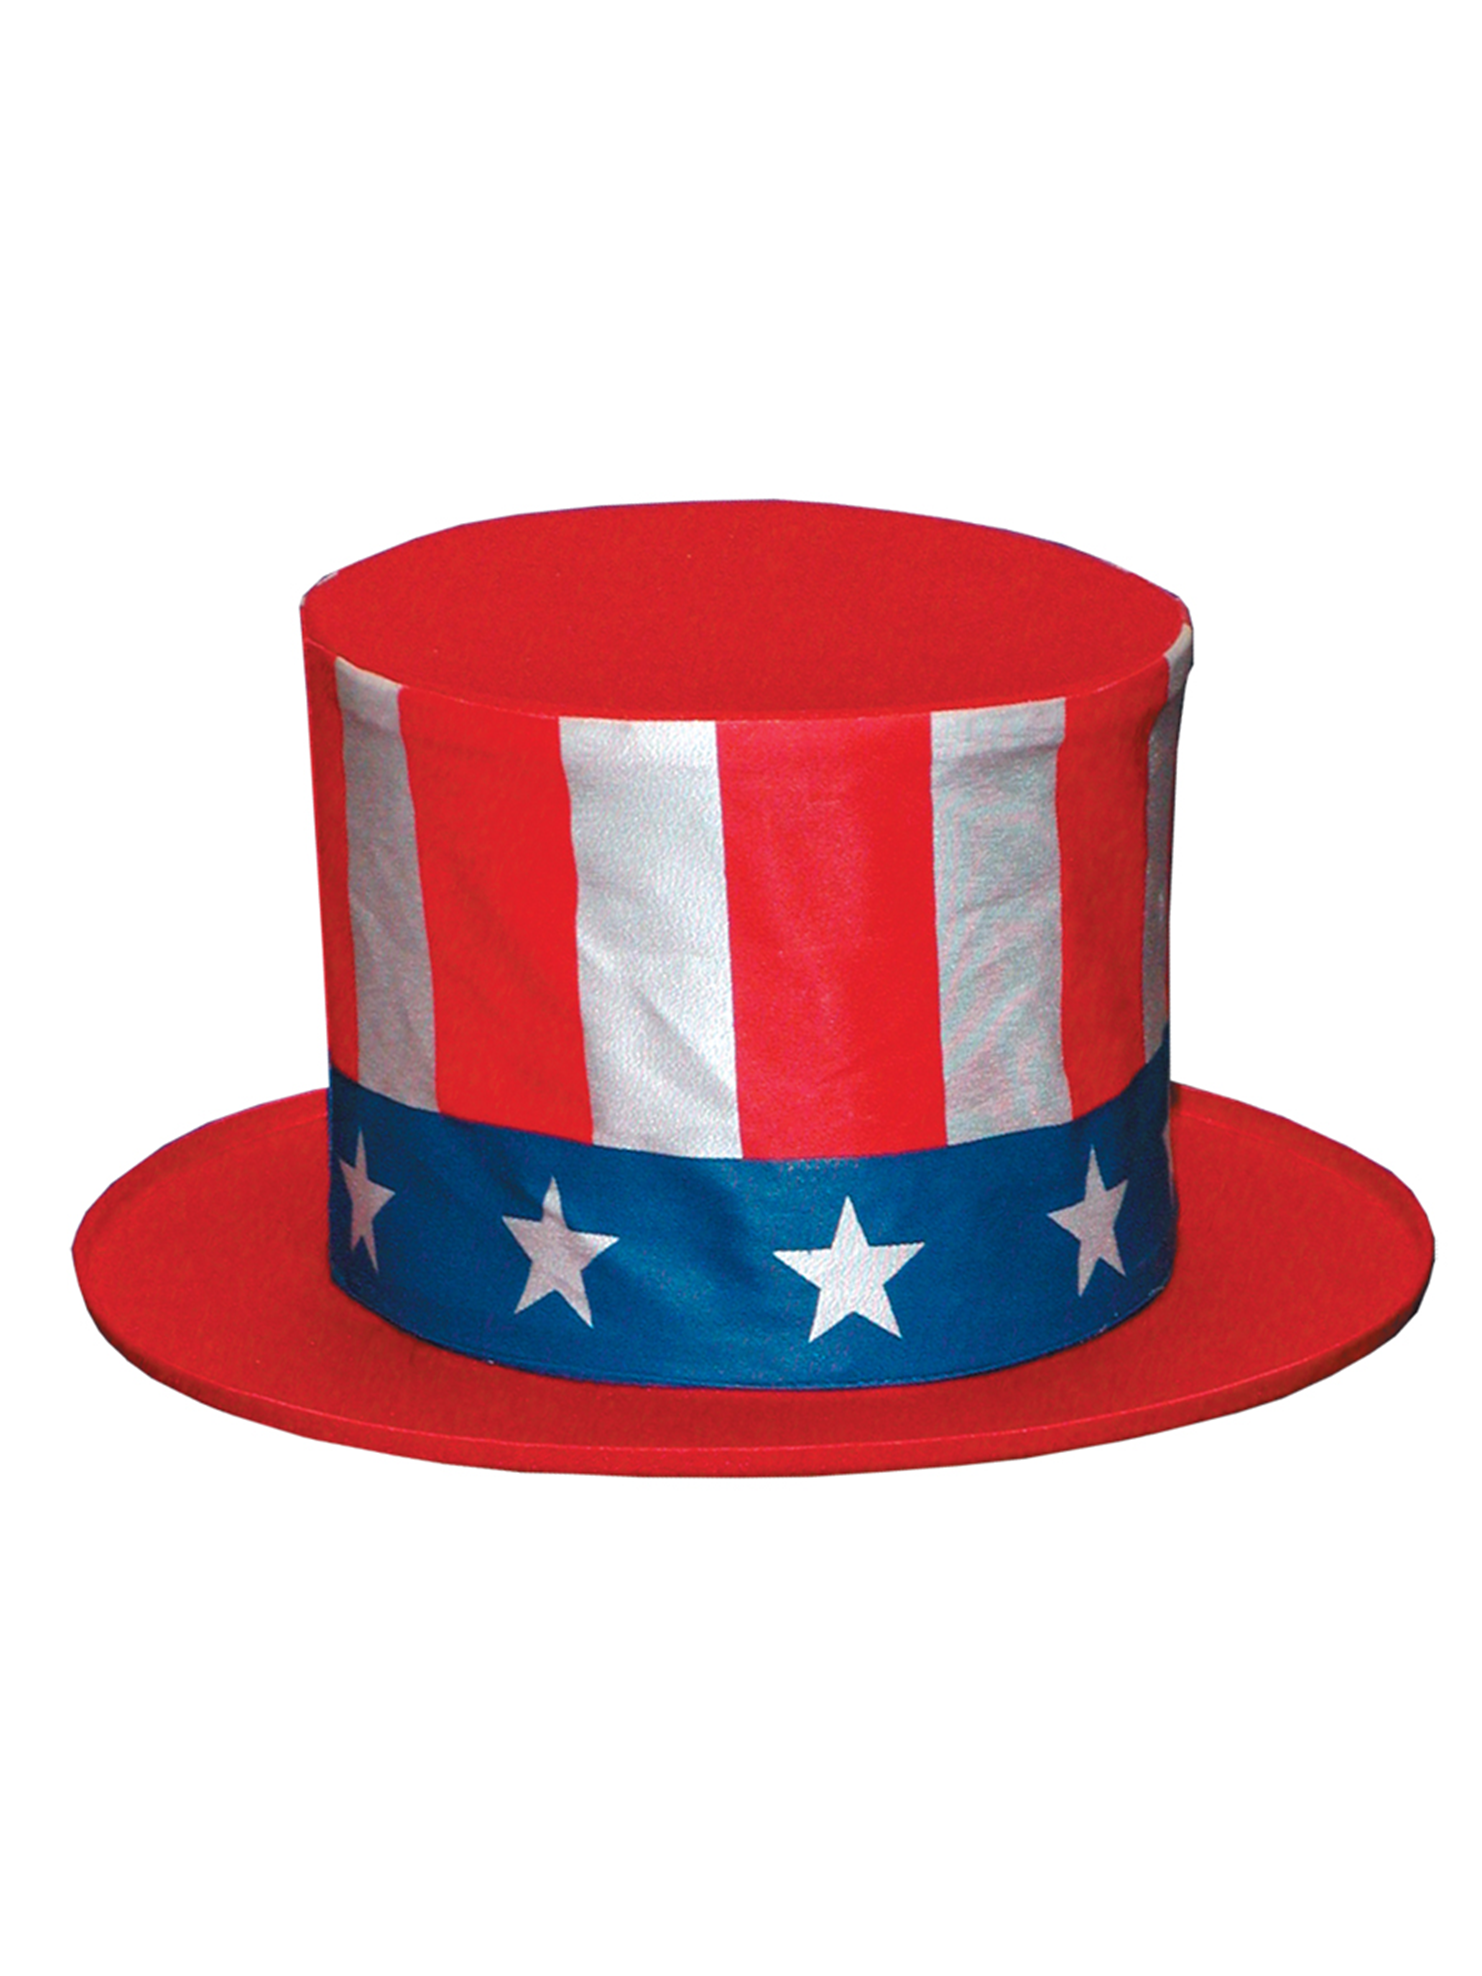 Шляпа америка. Шляпа дяди Сэма. Дядя Сэм в американской шляпе. Американская шляпа. Американский цилиндр.